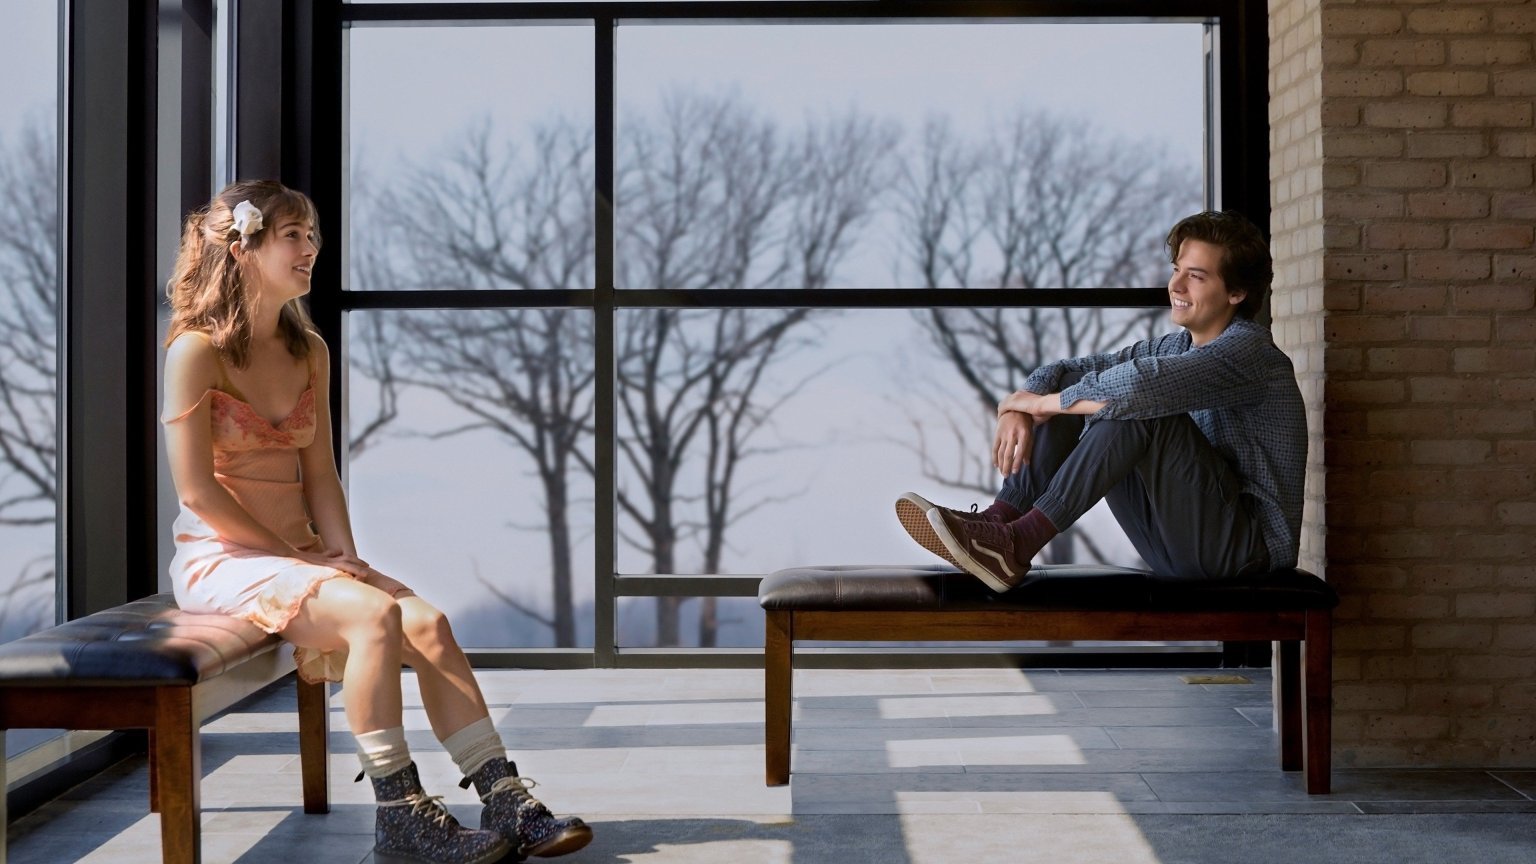 Romantische dramafilm 'Five Feet Apart' met Cole Sprouse komt naar Netflix